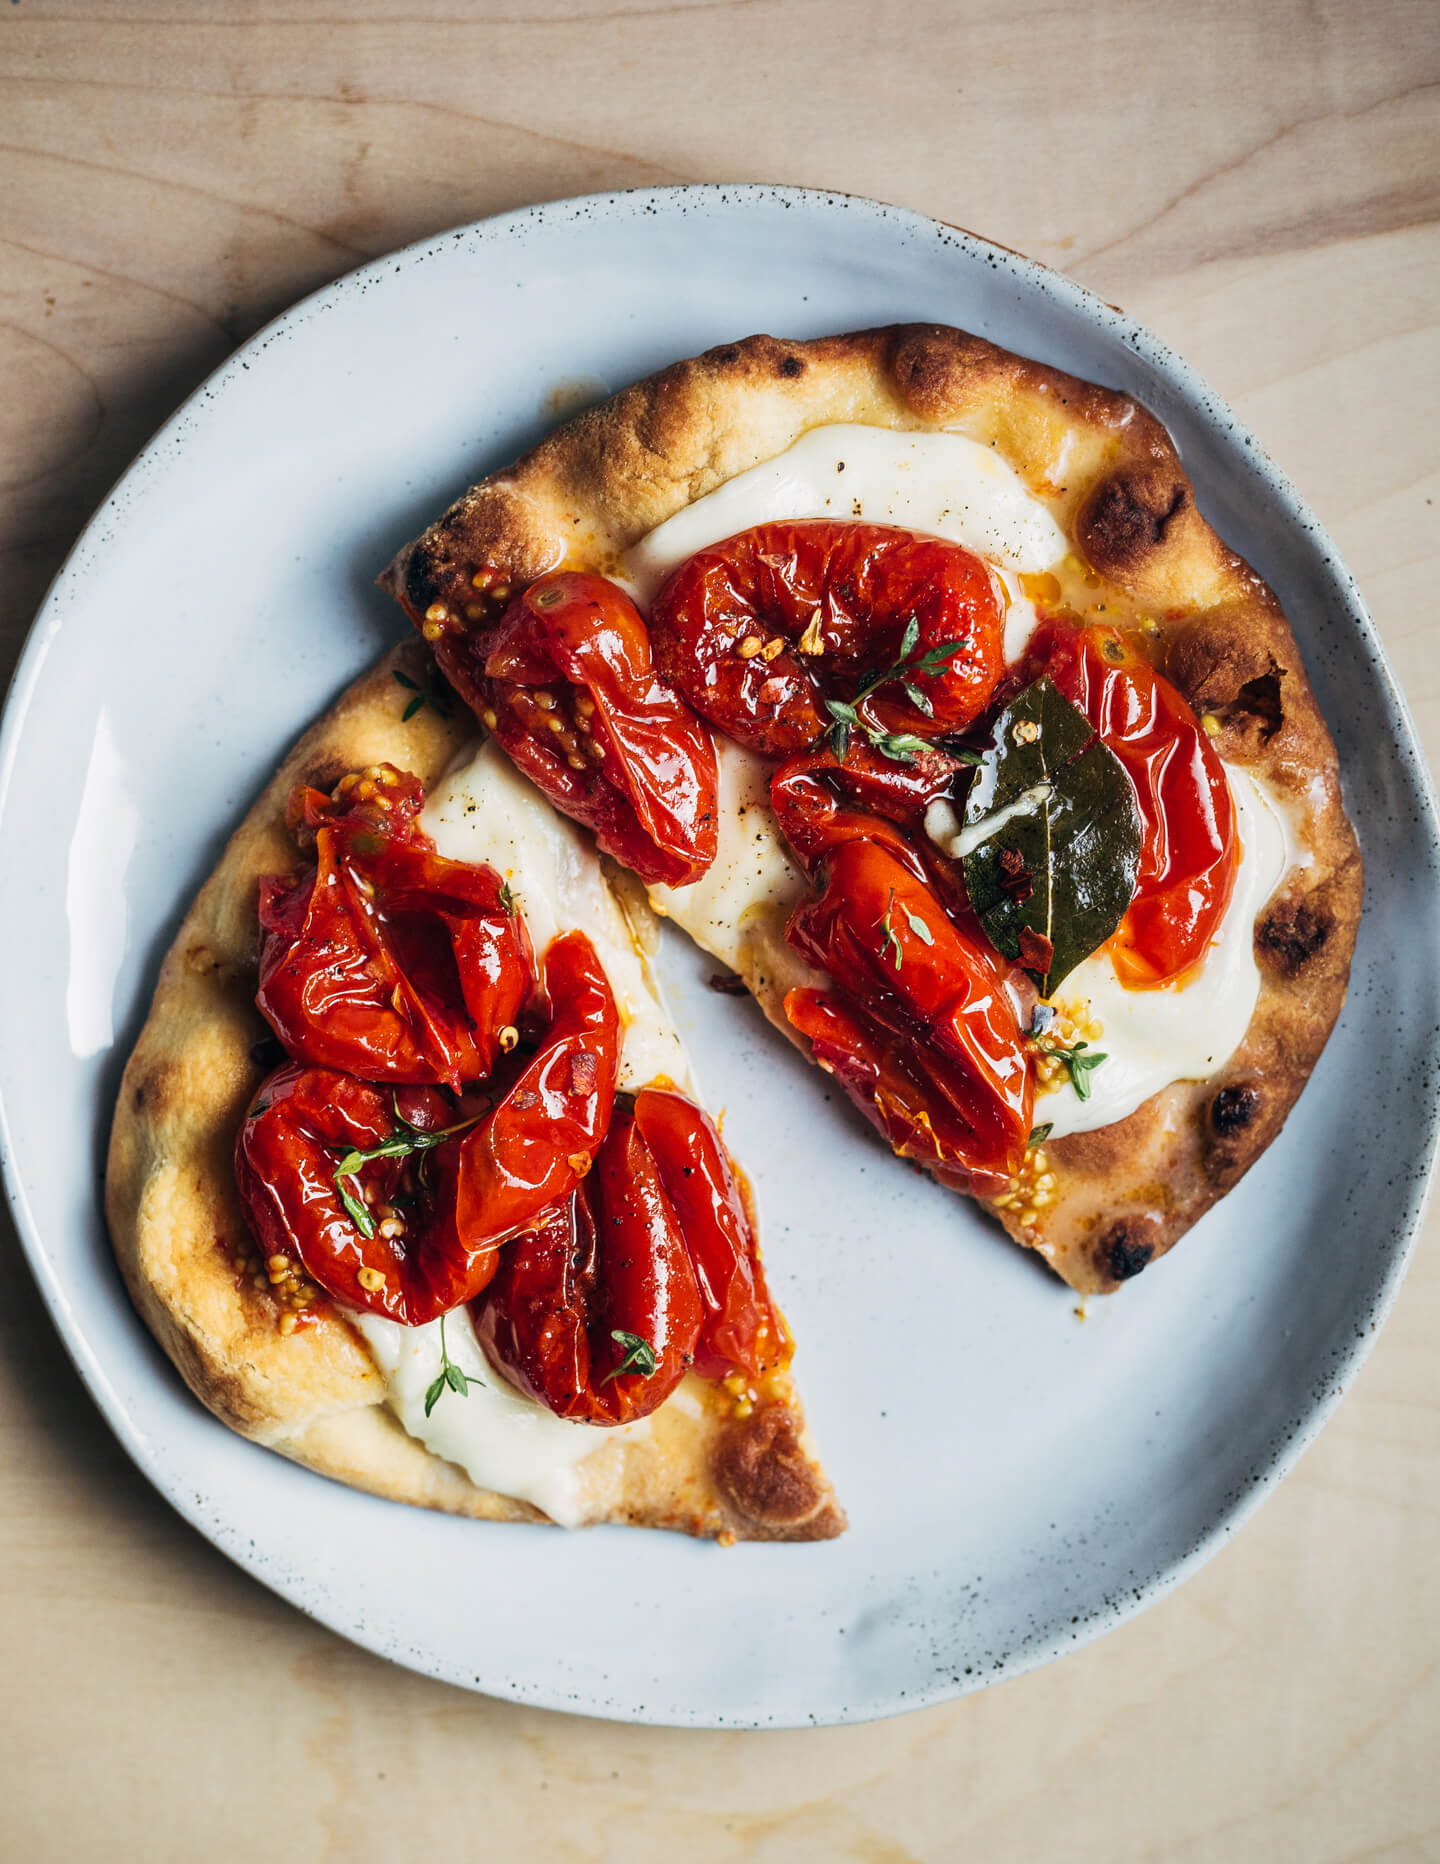 Tomato confit spread over melted mozzarella on a toasted flatbread. 